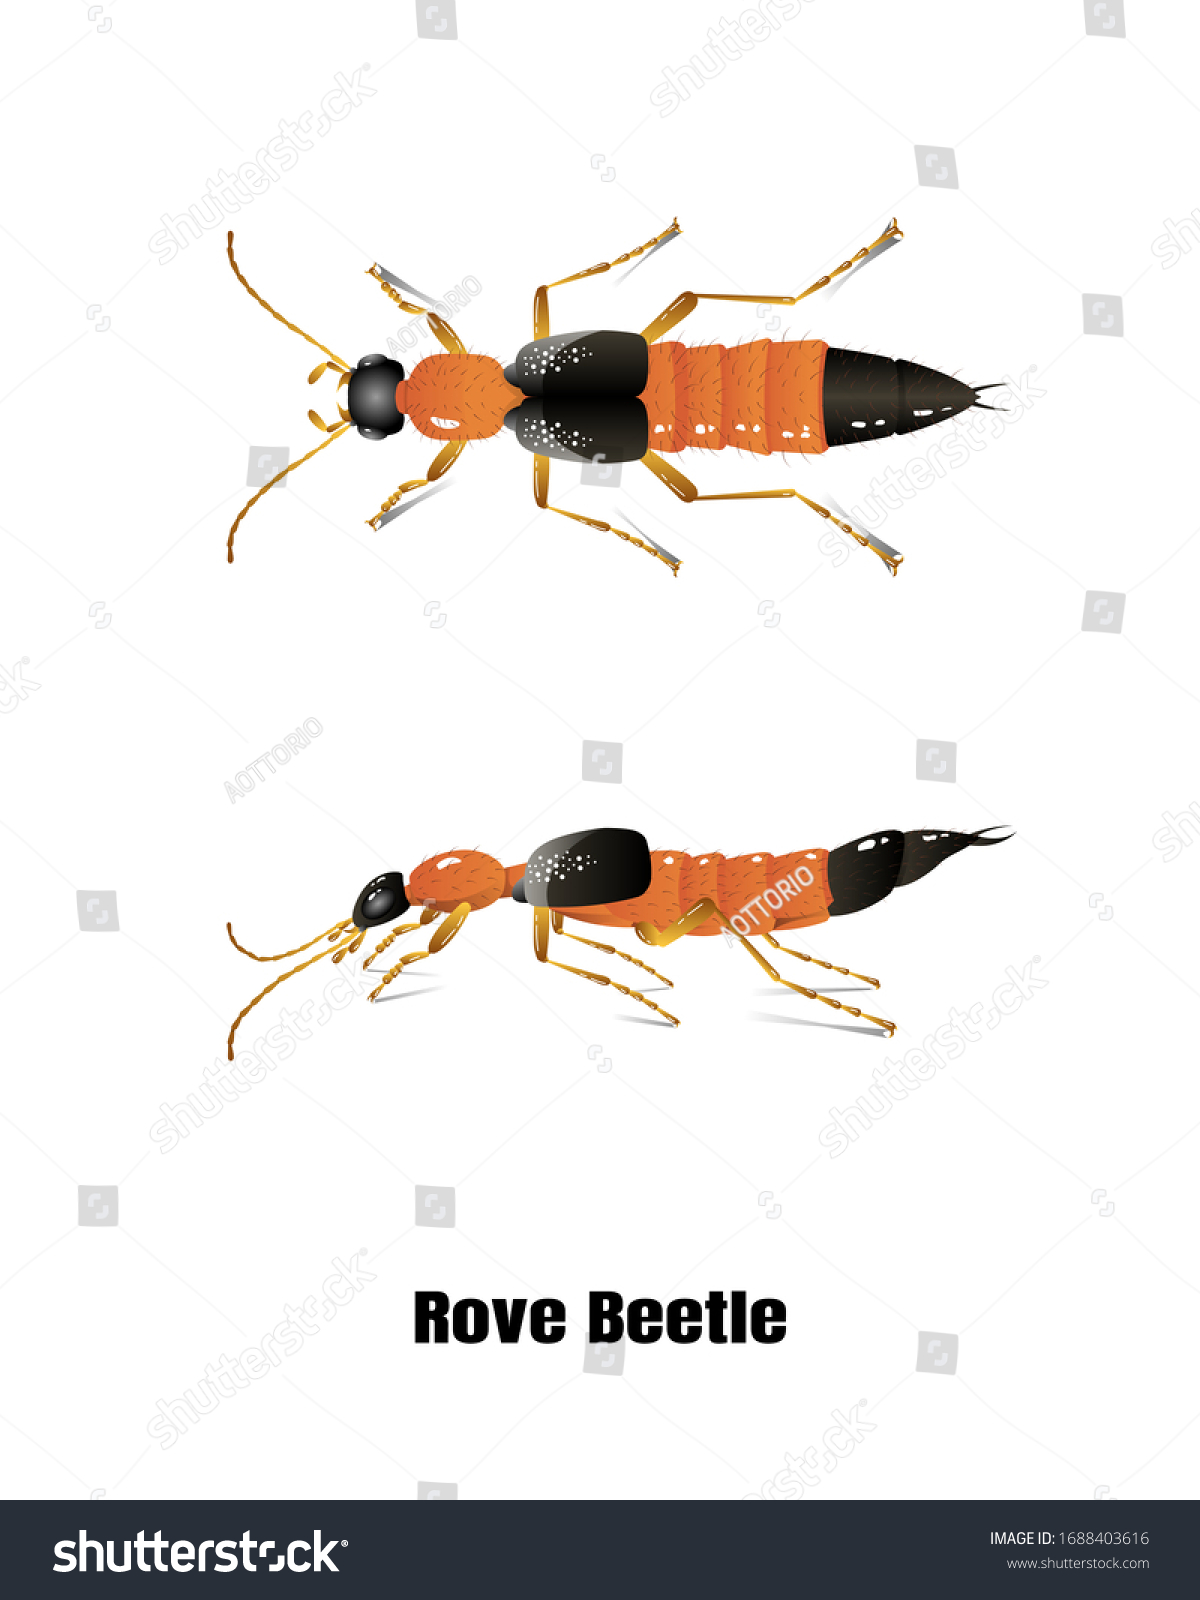 Beetle rove DOC2US